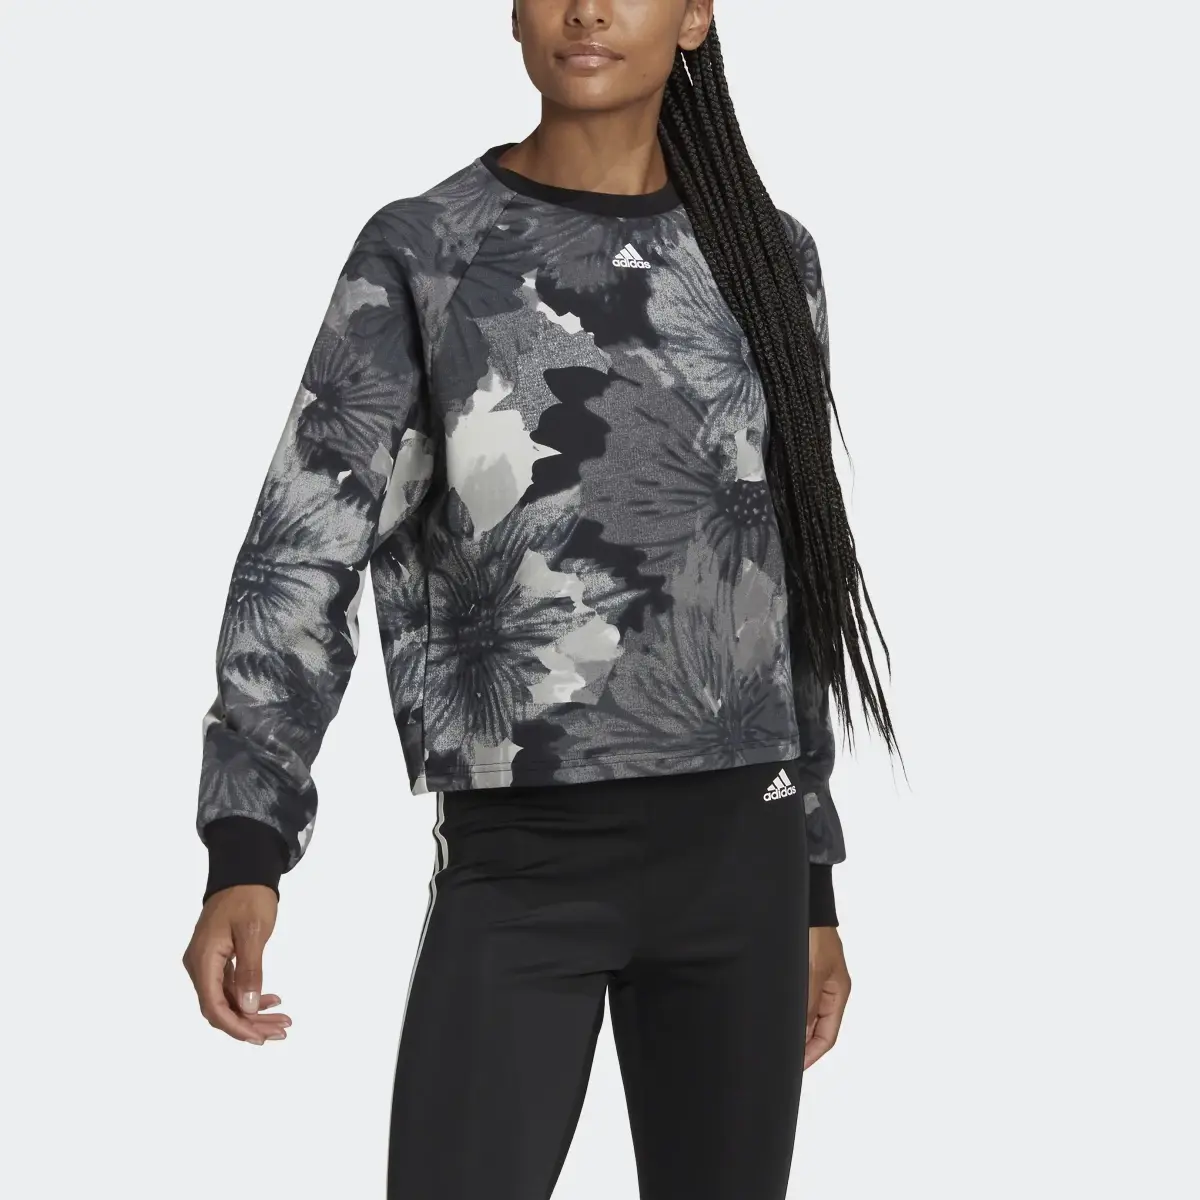 Adidas Allover Print Sweatshirt. 1